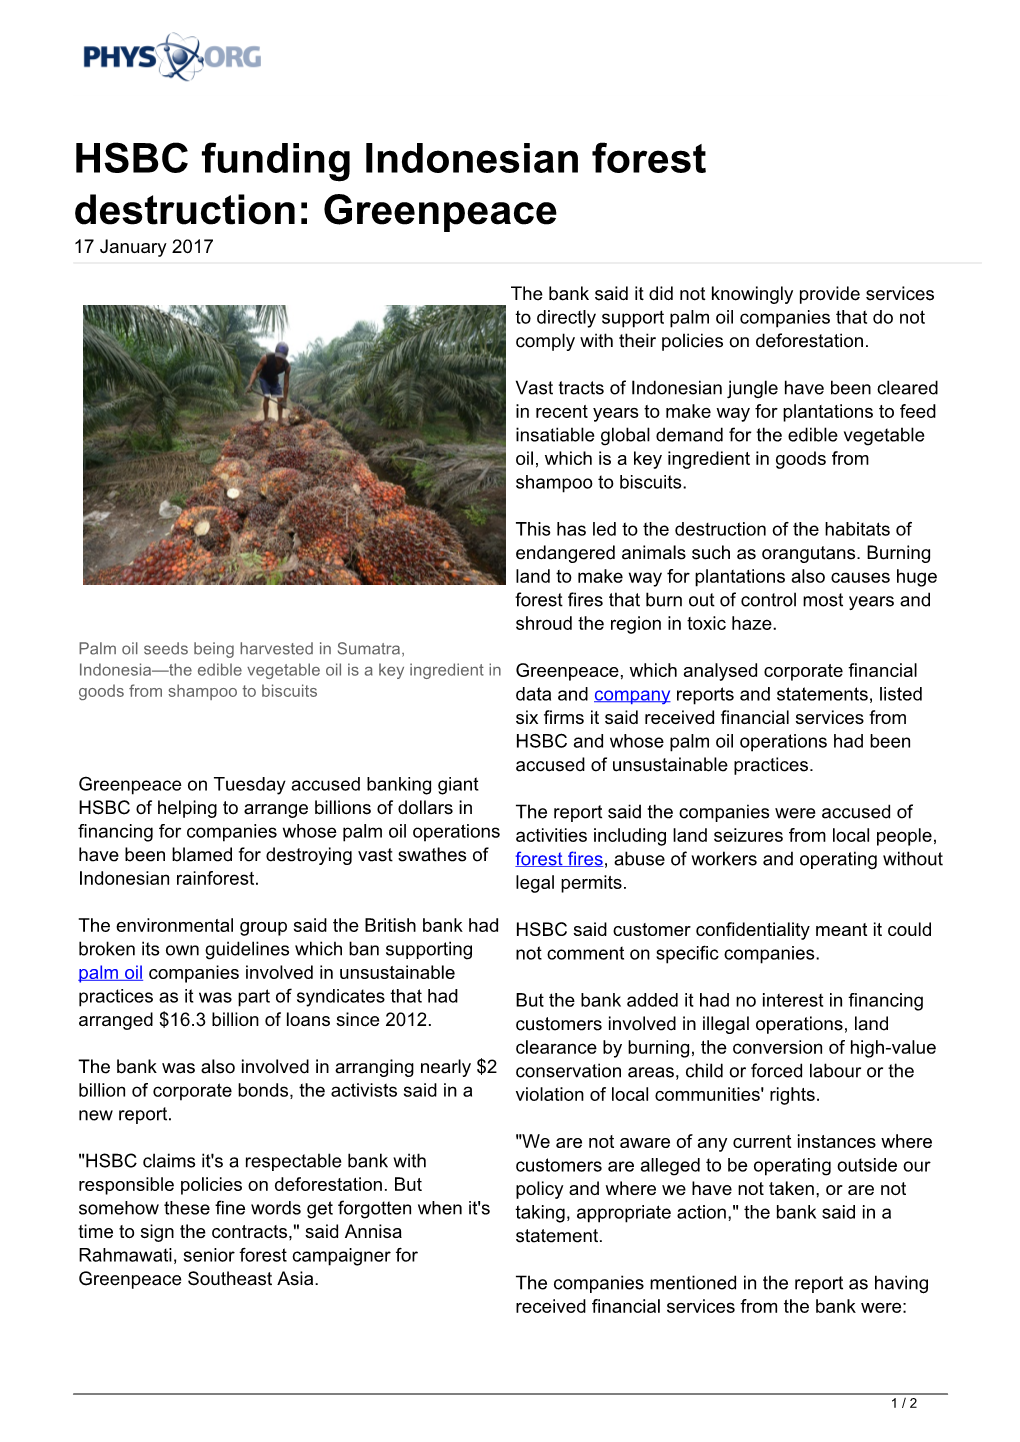 HSBC Funding Indonesian Forest Destruction: Greenpeace 17 January 2017